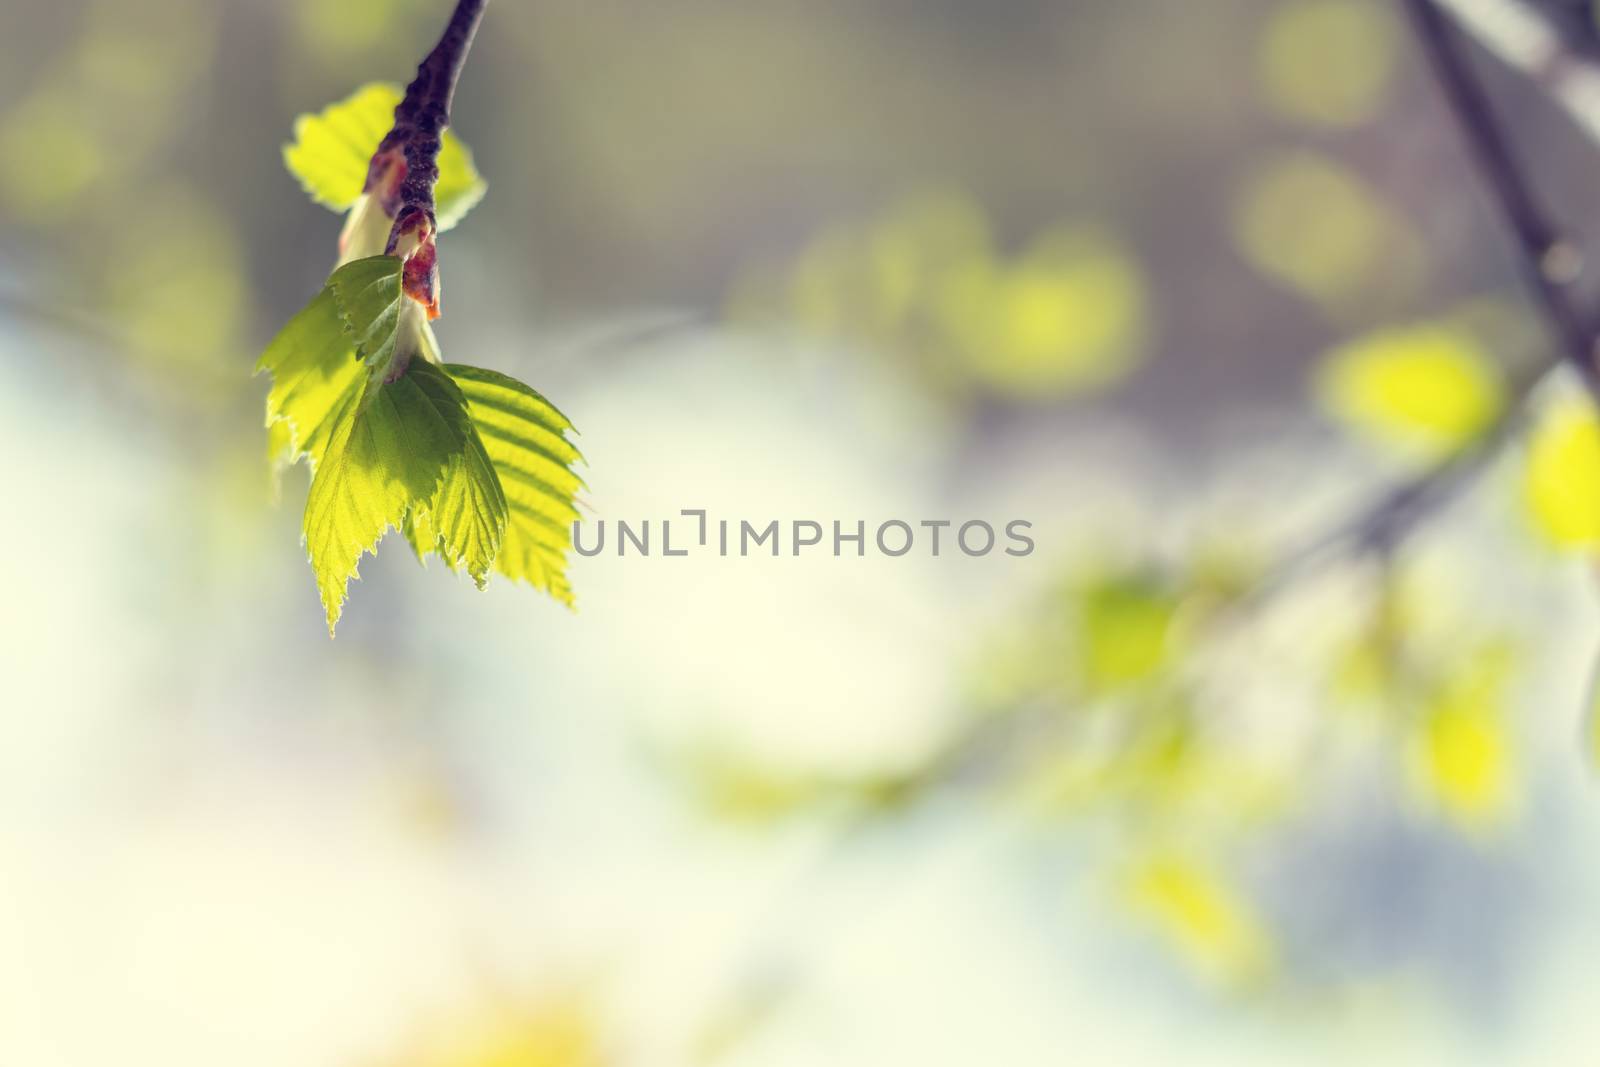 Birch twig with young foliage by ArtSvitlyna